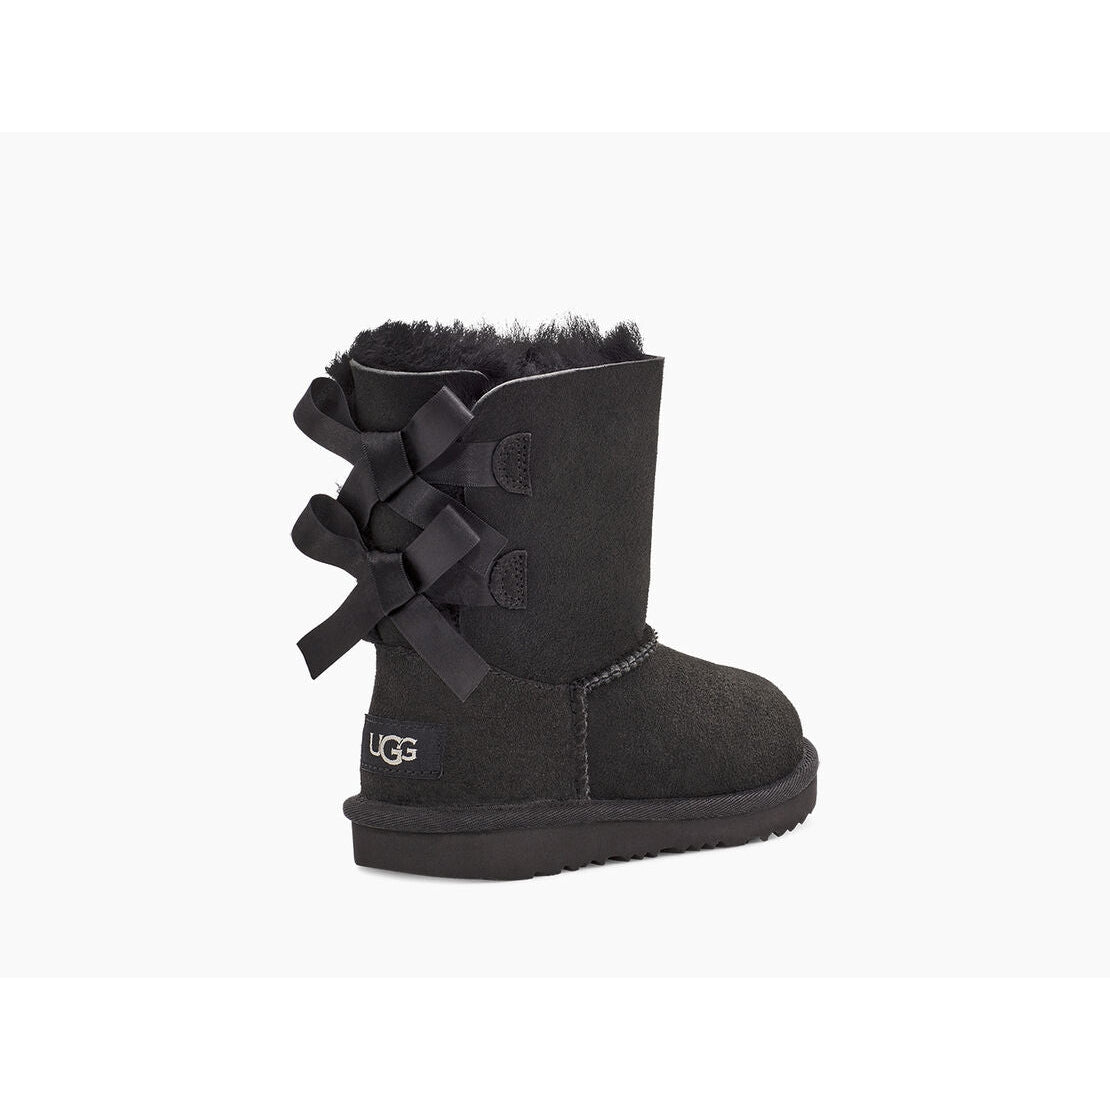 Ugg K Bailey Bow 2 Boots - Size UK 1 - Black